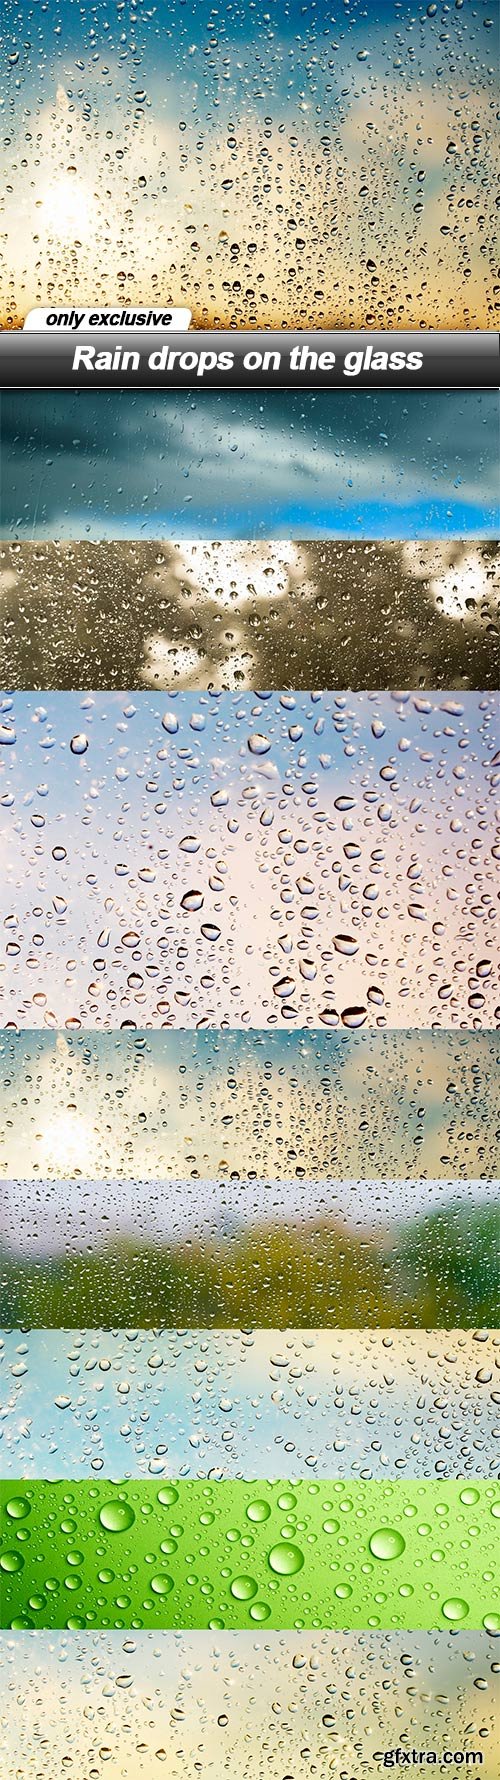 Rain drops on the glass - 8 UHQ JPEG